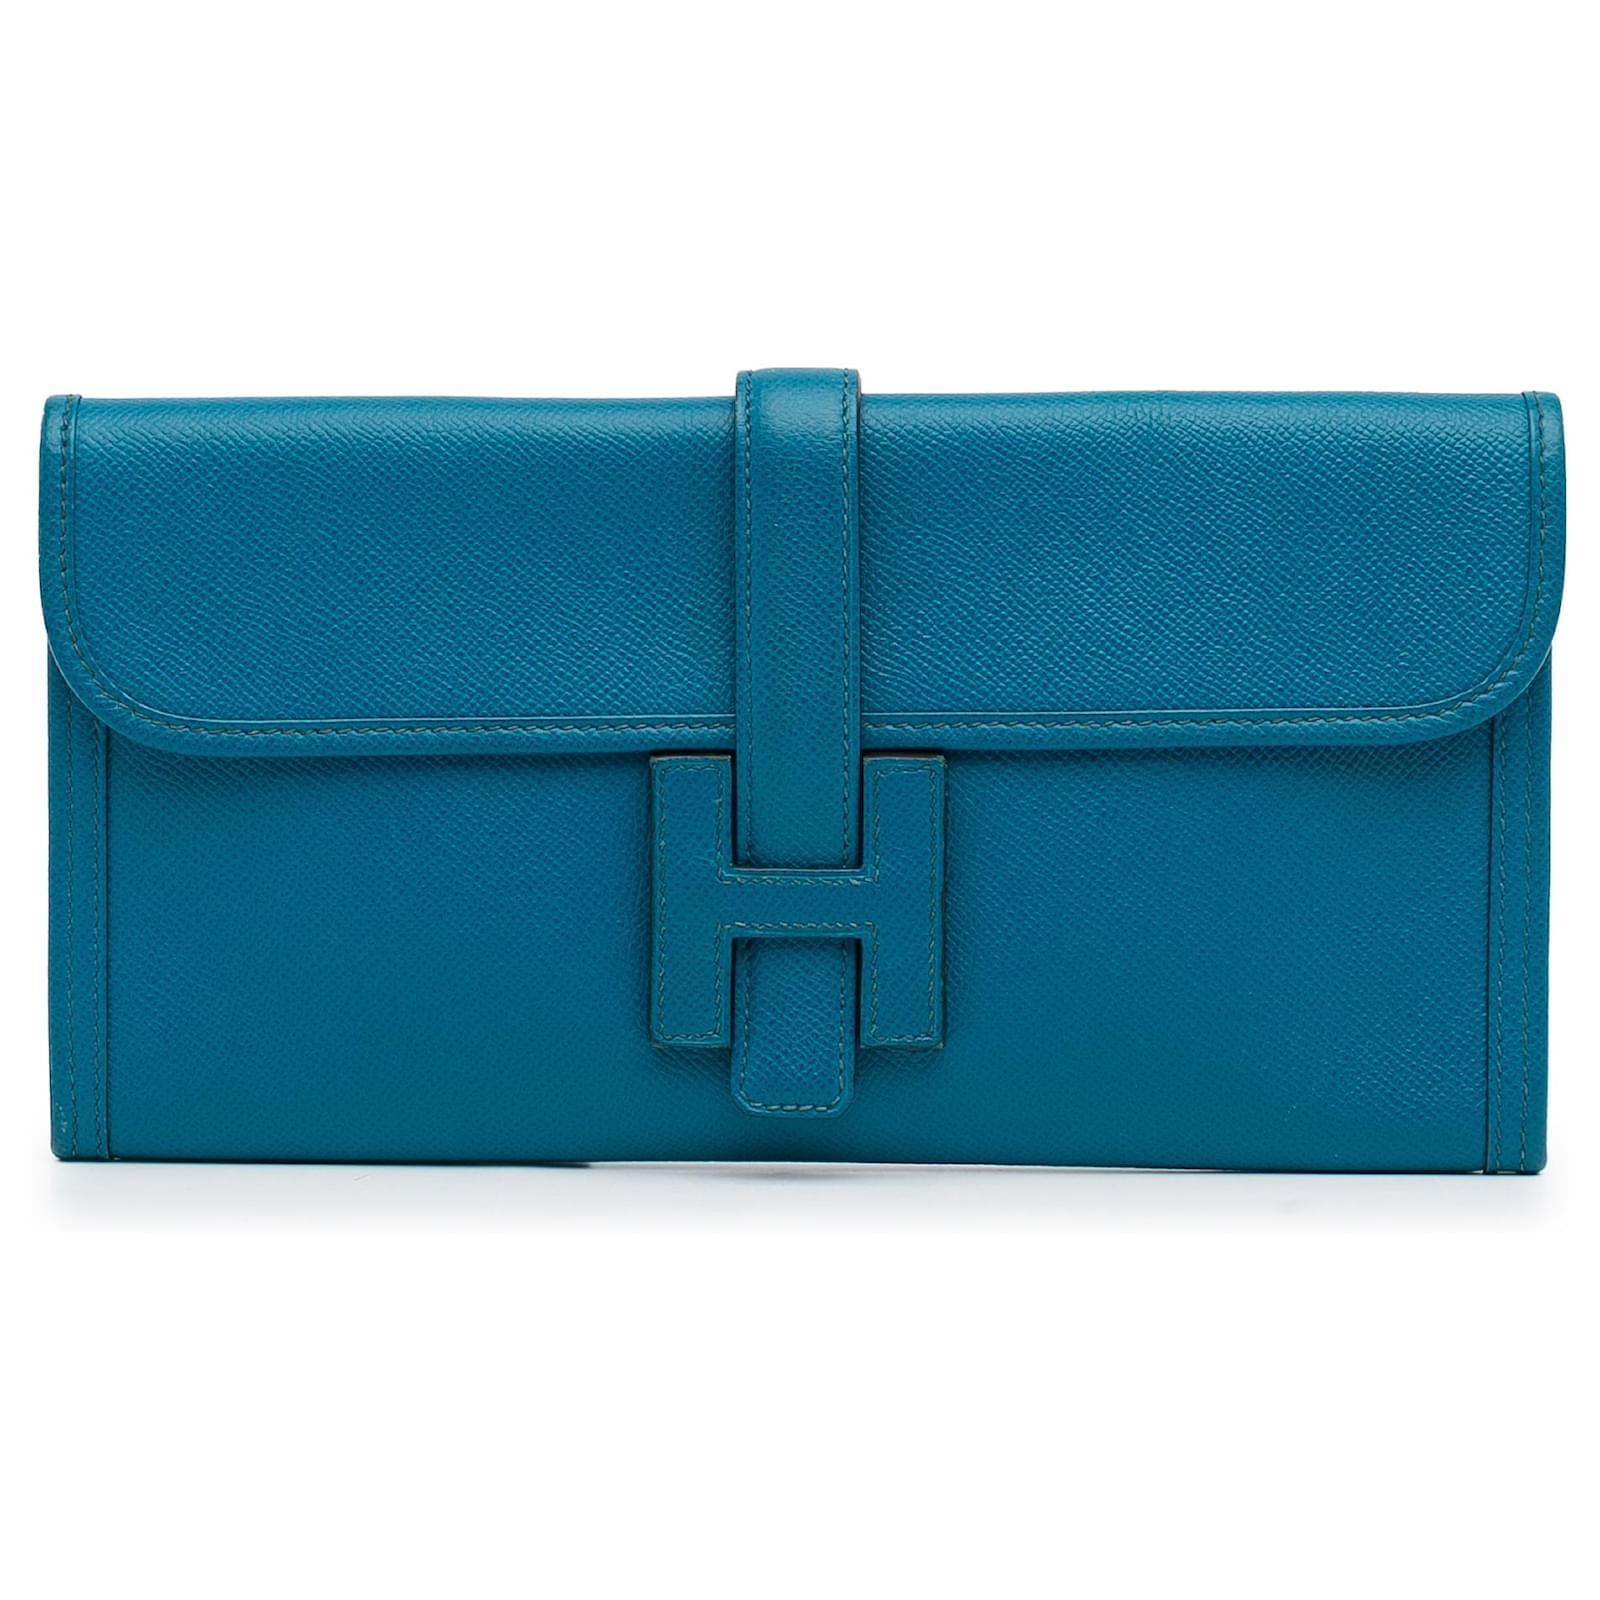 Blue Hermes Swift Jige Elan 29 Clutch Bag